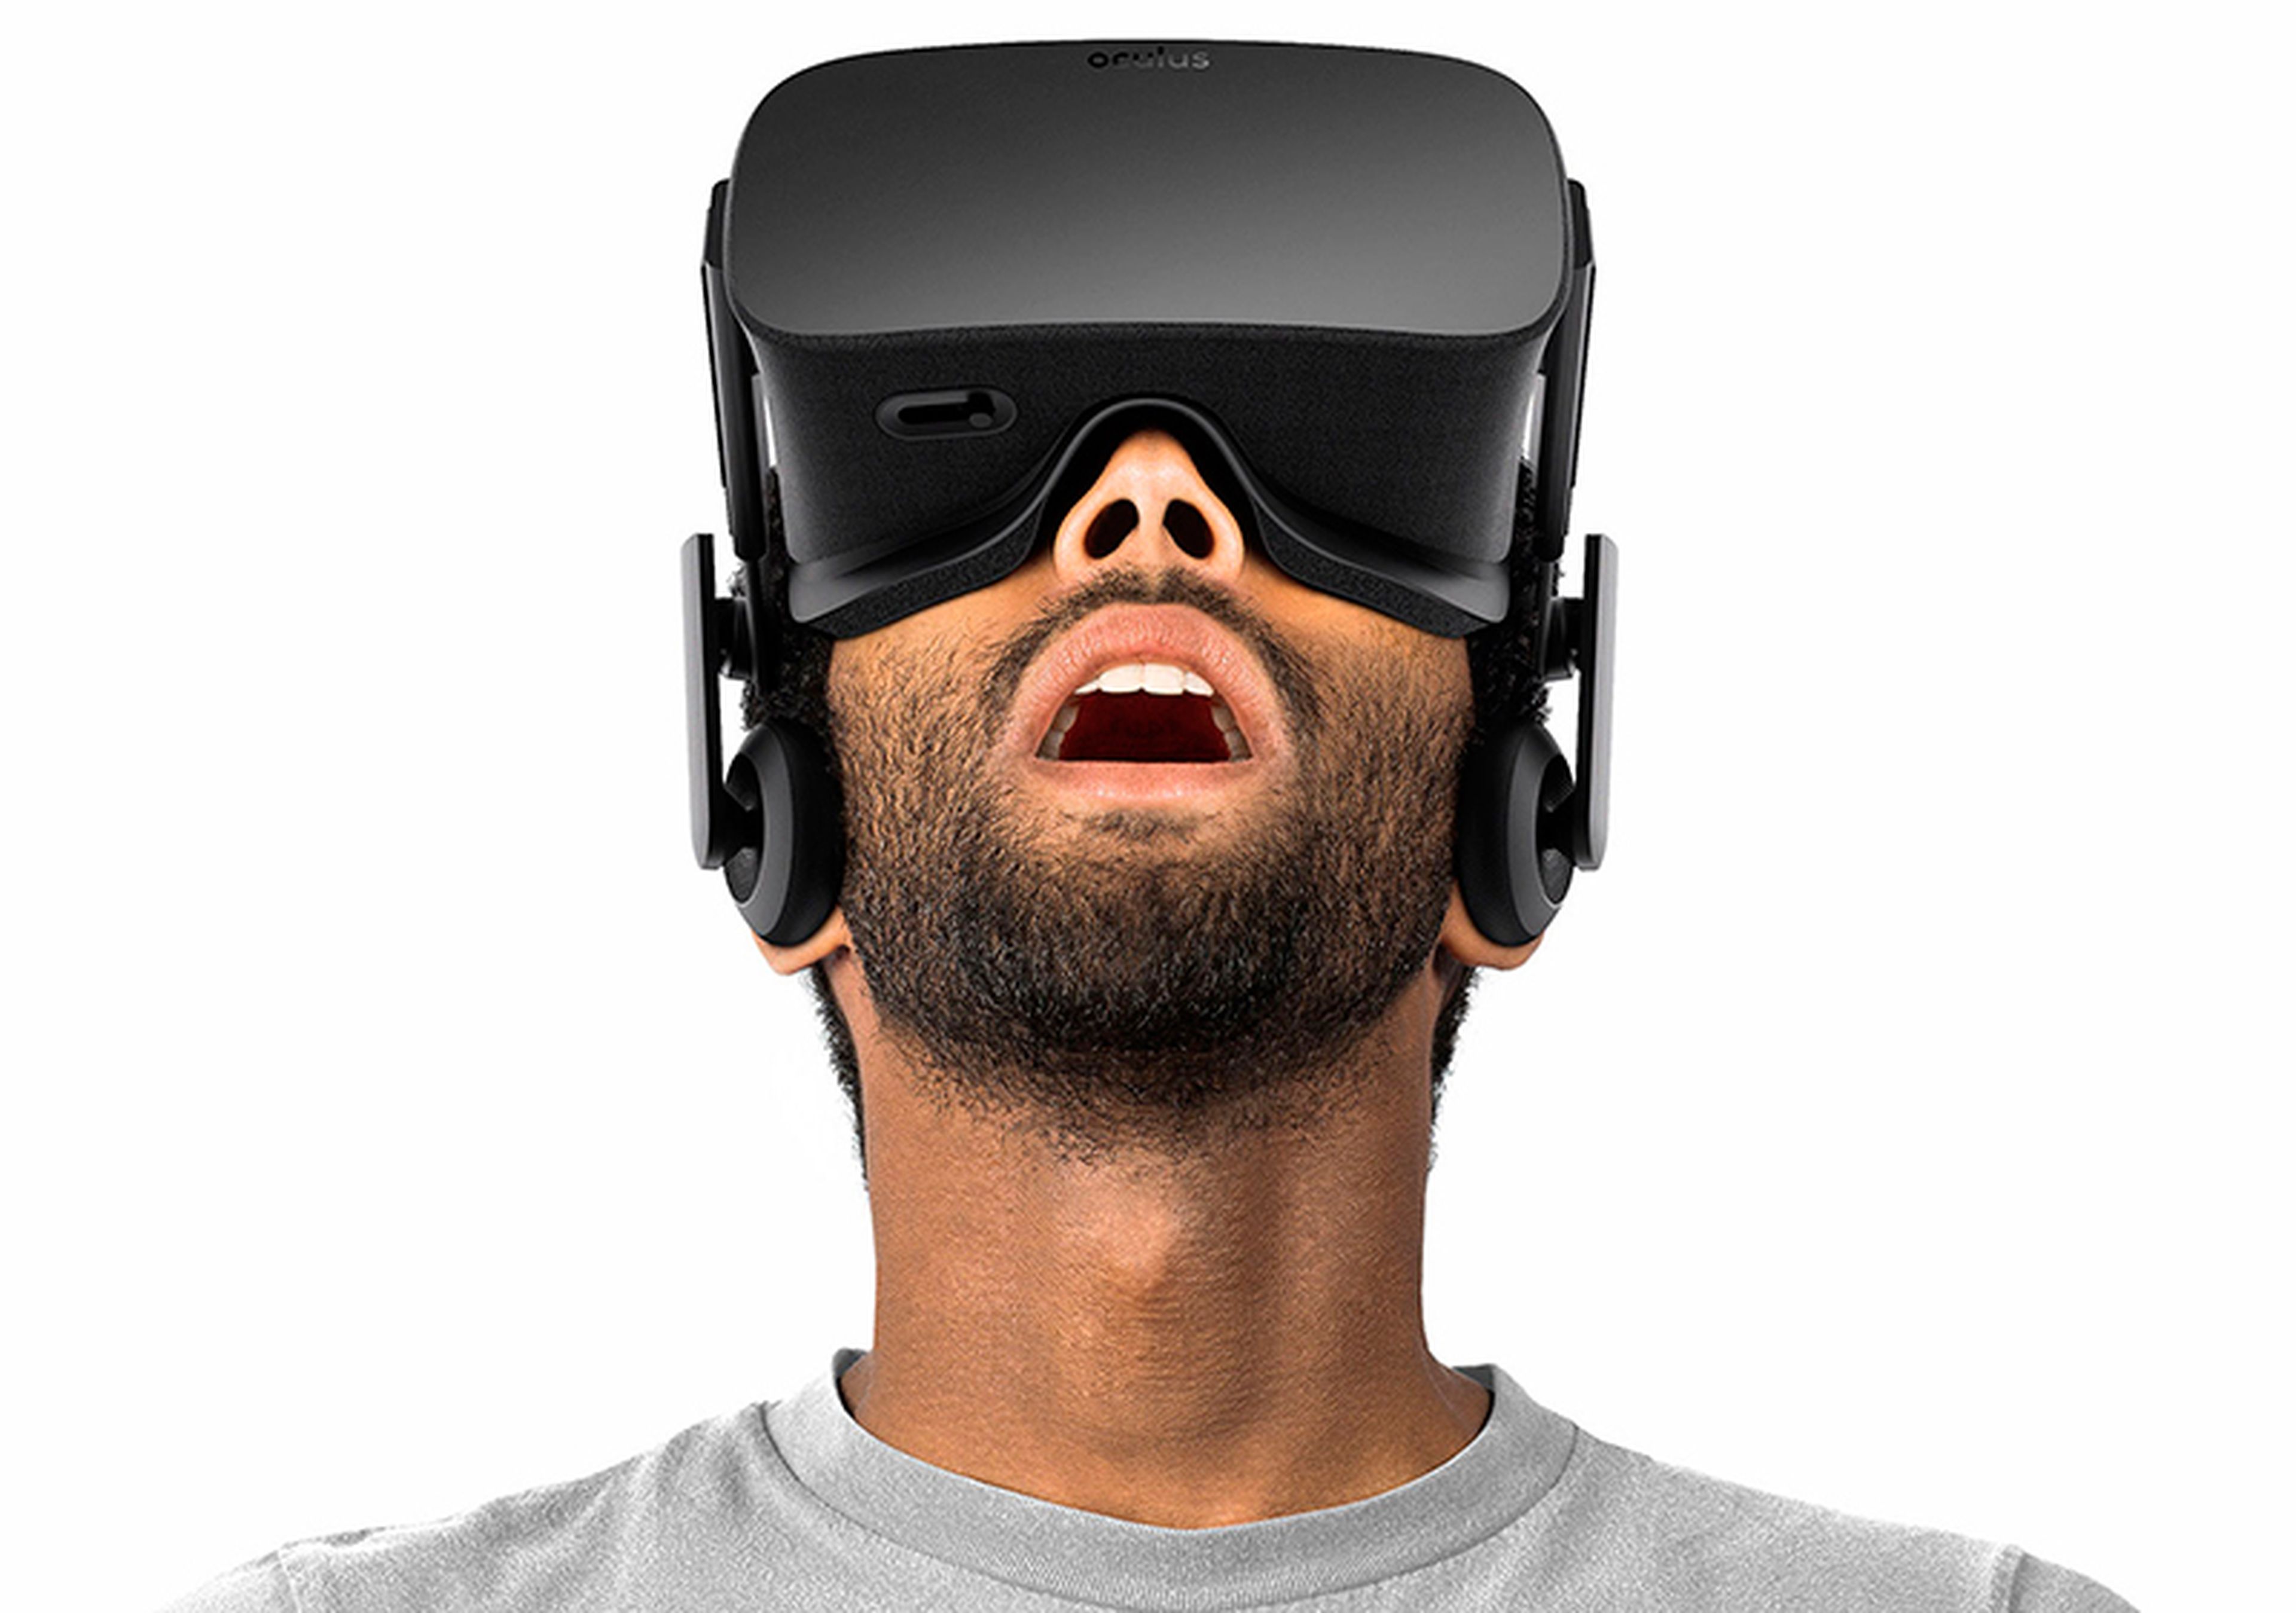 PS VR, Oculus Rift, HTC Vive, Gear VR - Las mejores gafas de realidad virtual